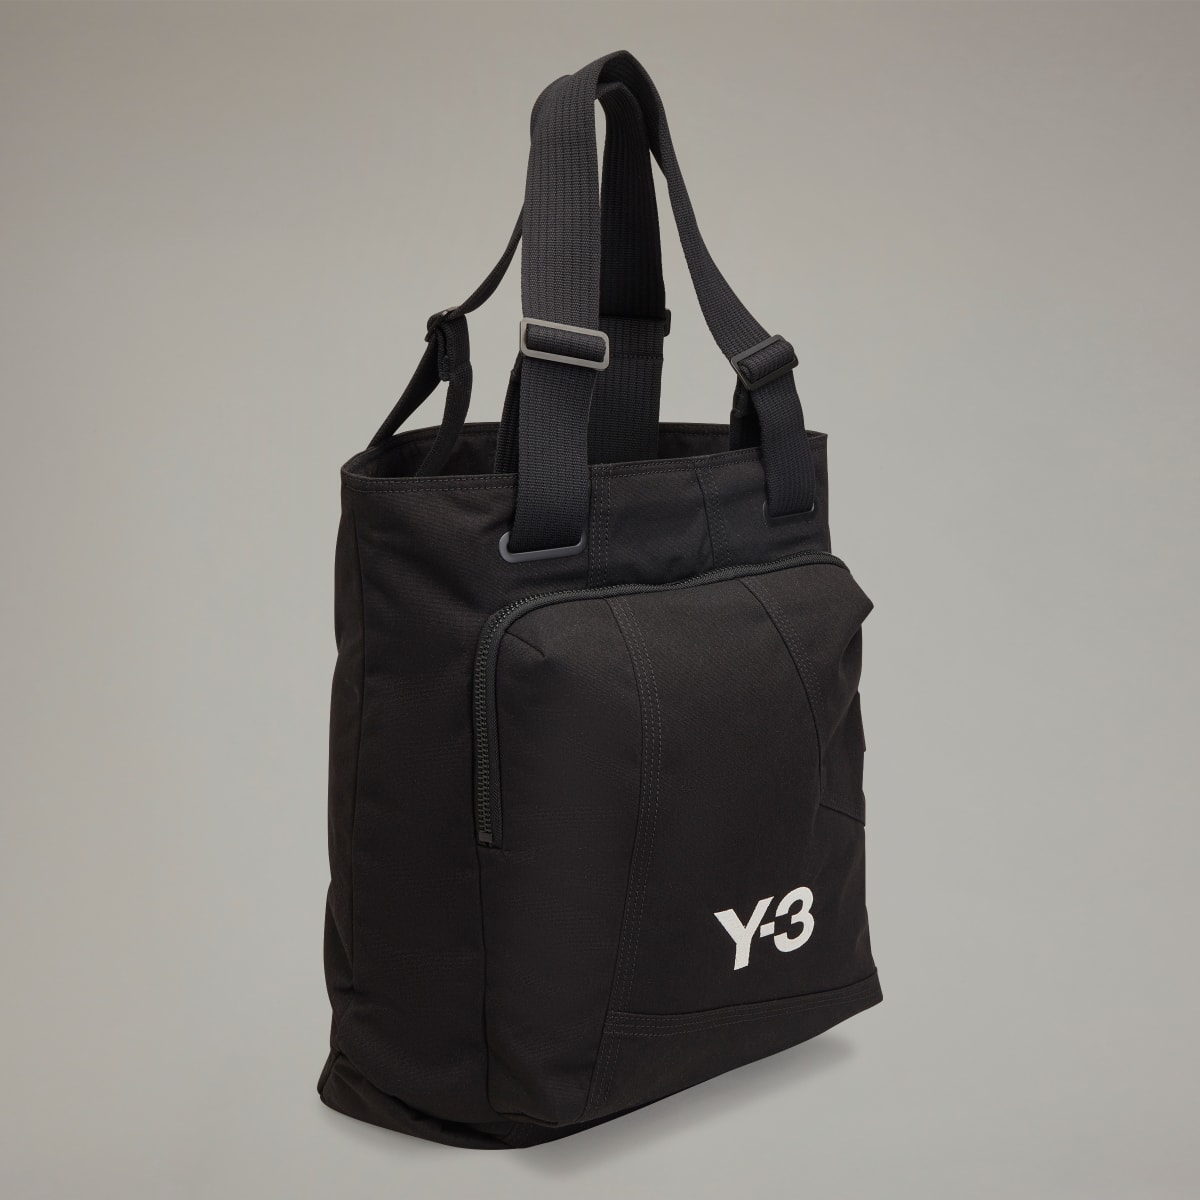 Adidas Y-3 Classic Tote Bag. 4